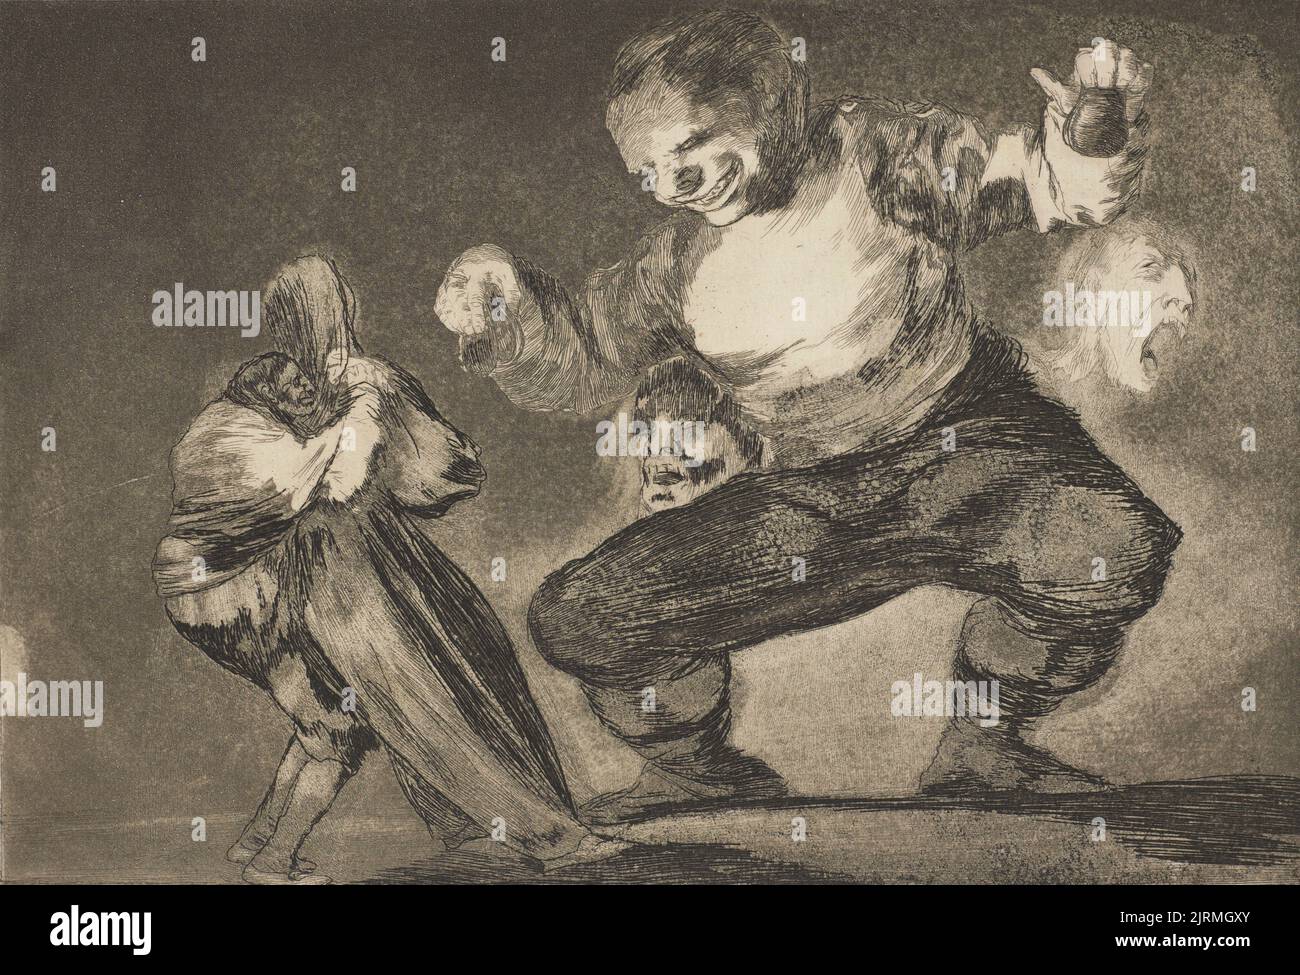 Bobalicón (sempliceton). Piatto 4 da: Disparates (Follies), 1814-20, Spagna, di Francisco Goya. Dono di Sir John Ilott, 1957. Foto Stock